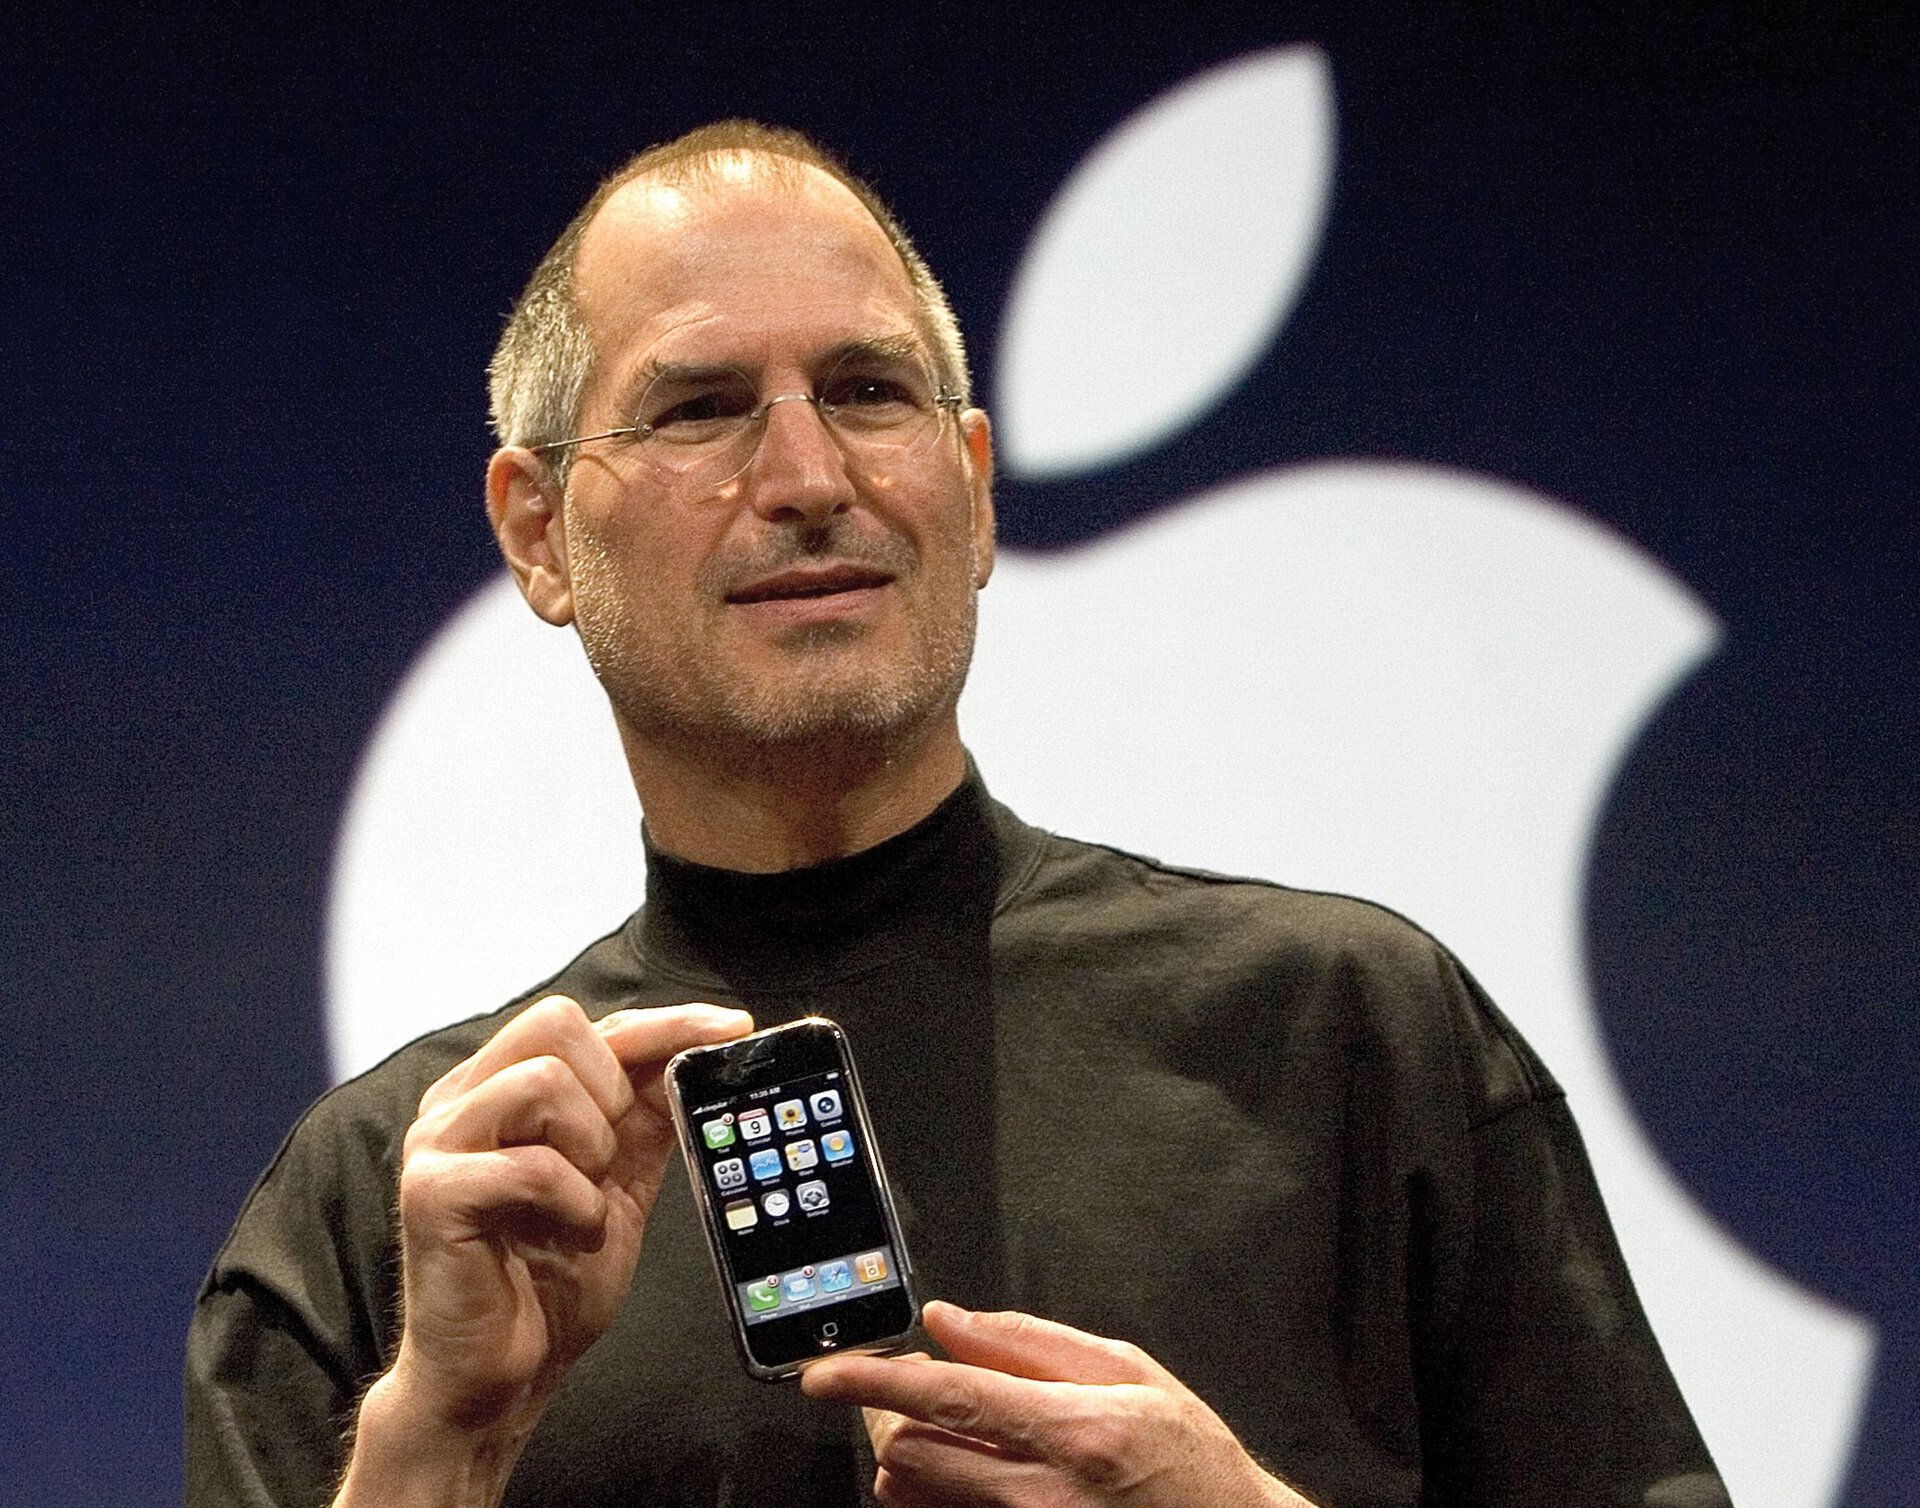 Steve Jobs holding the original iPhone.